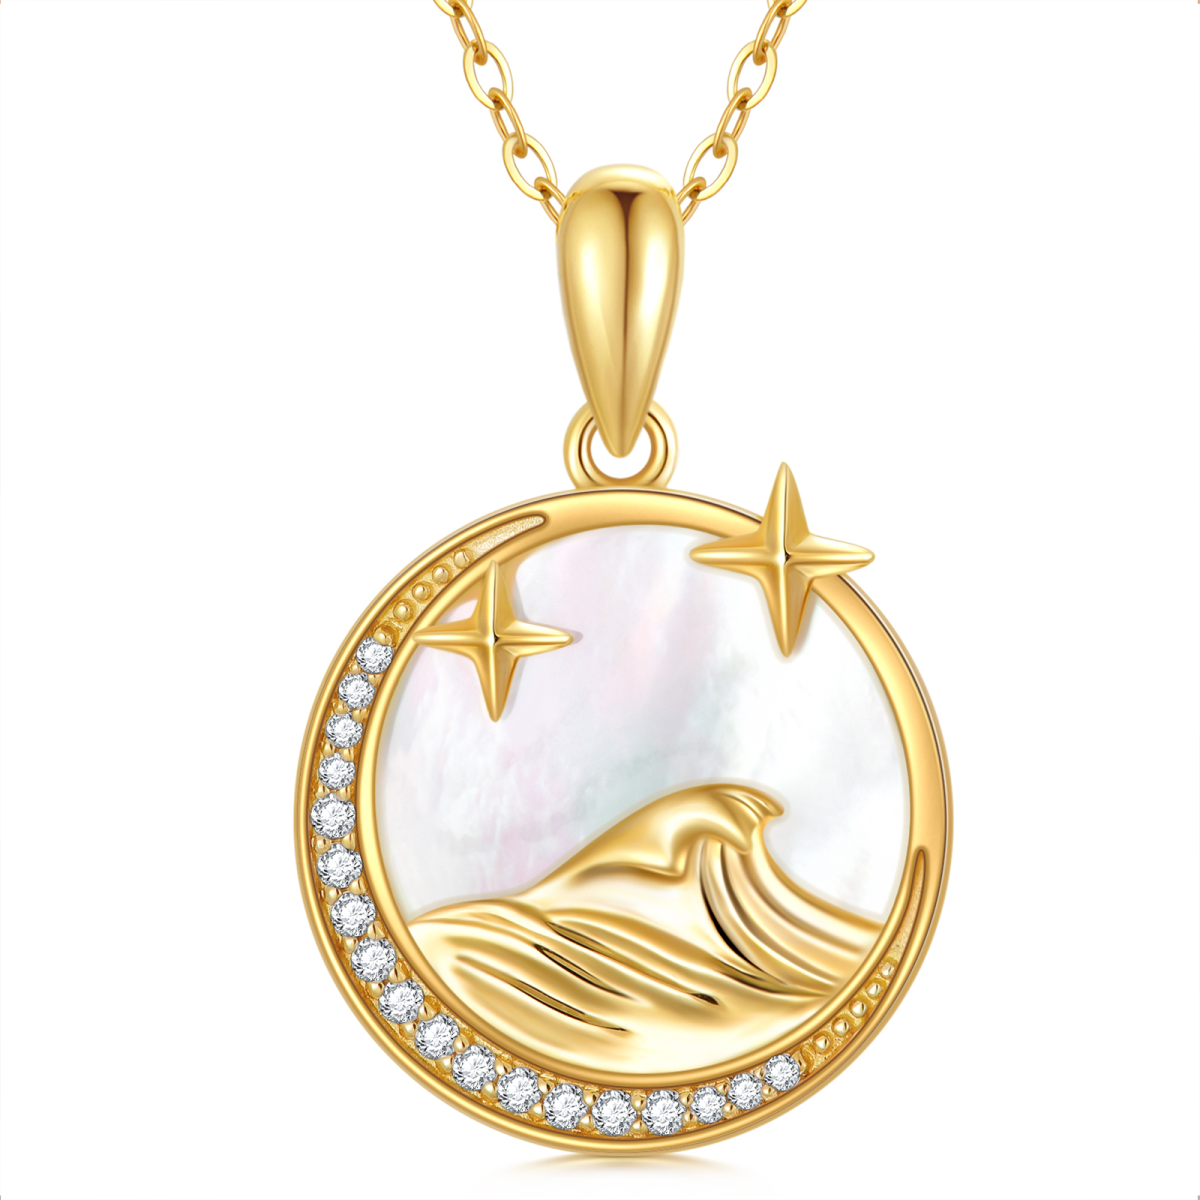 Collier en or 9K avec pendentif en forme de perle circulaire, lune et gerbe-5